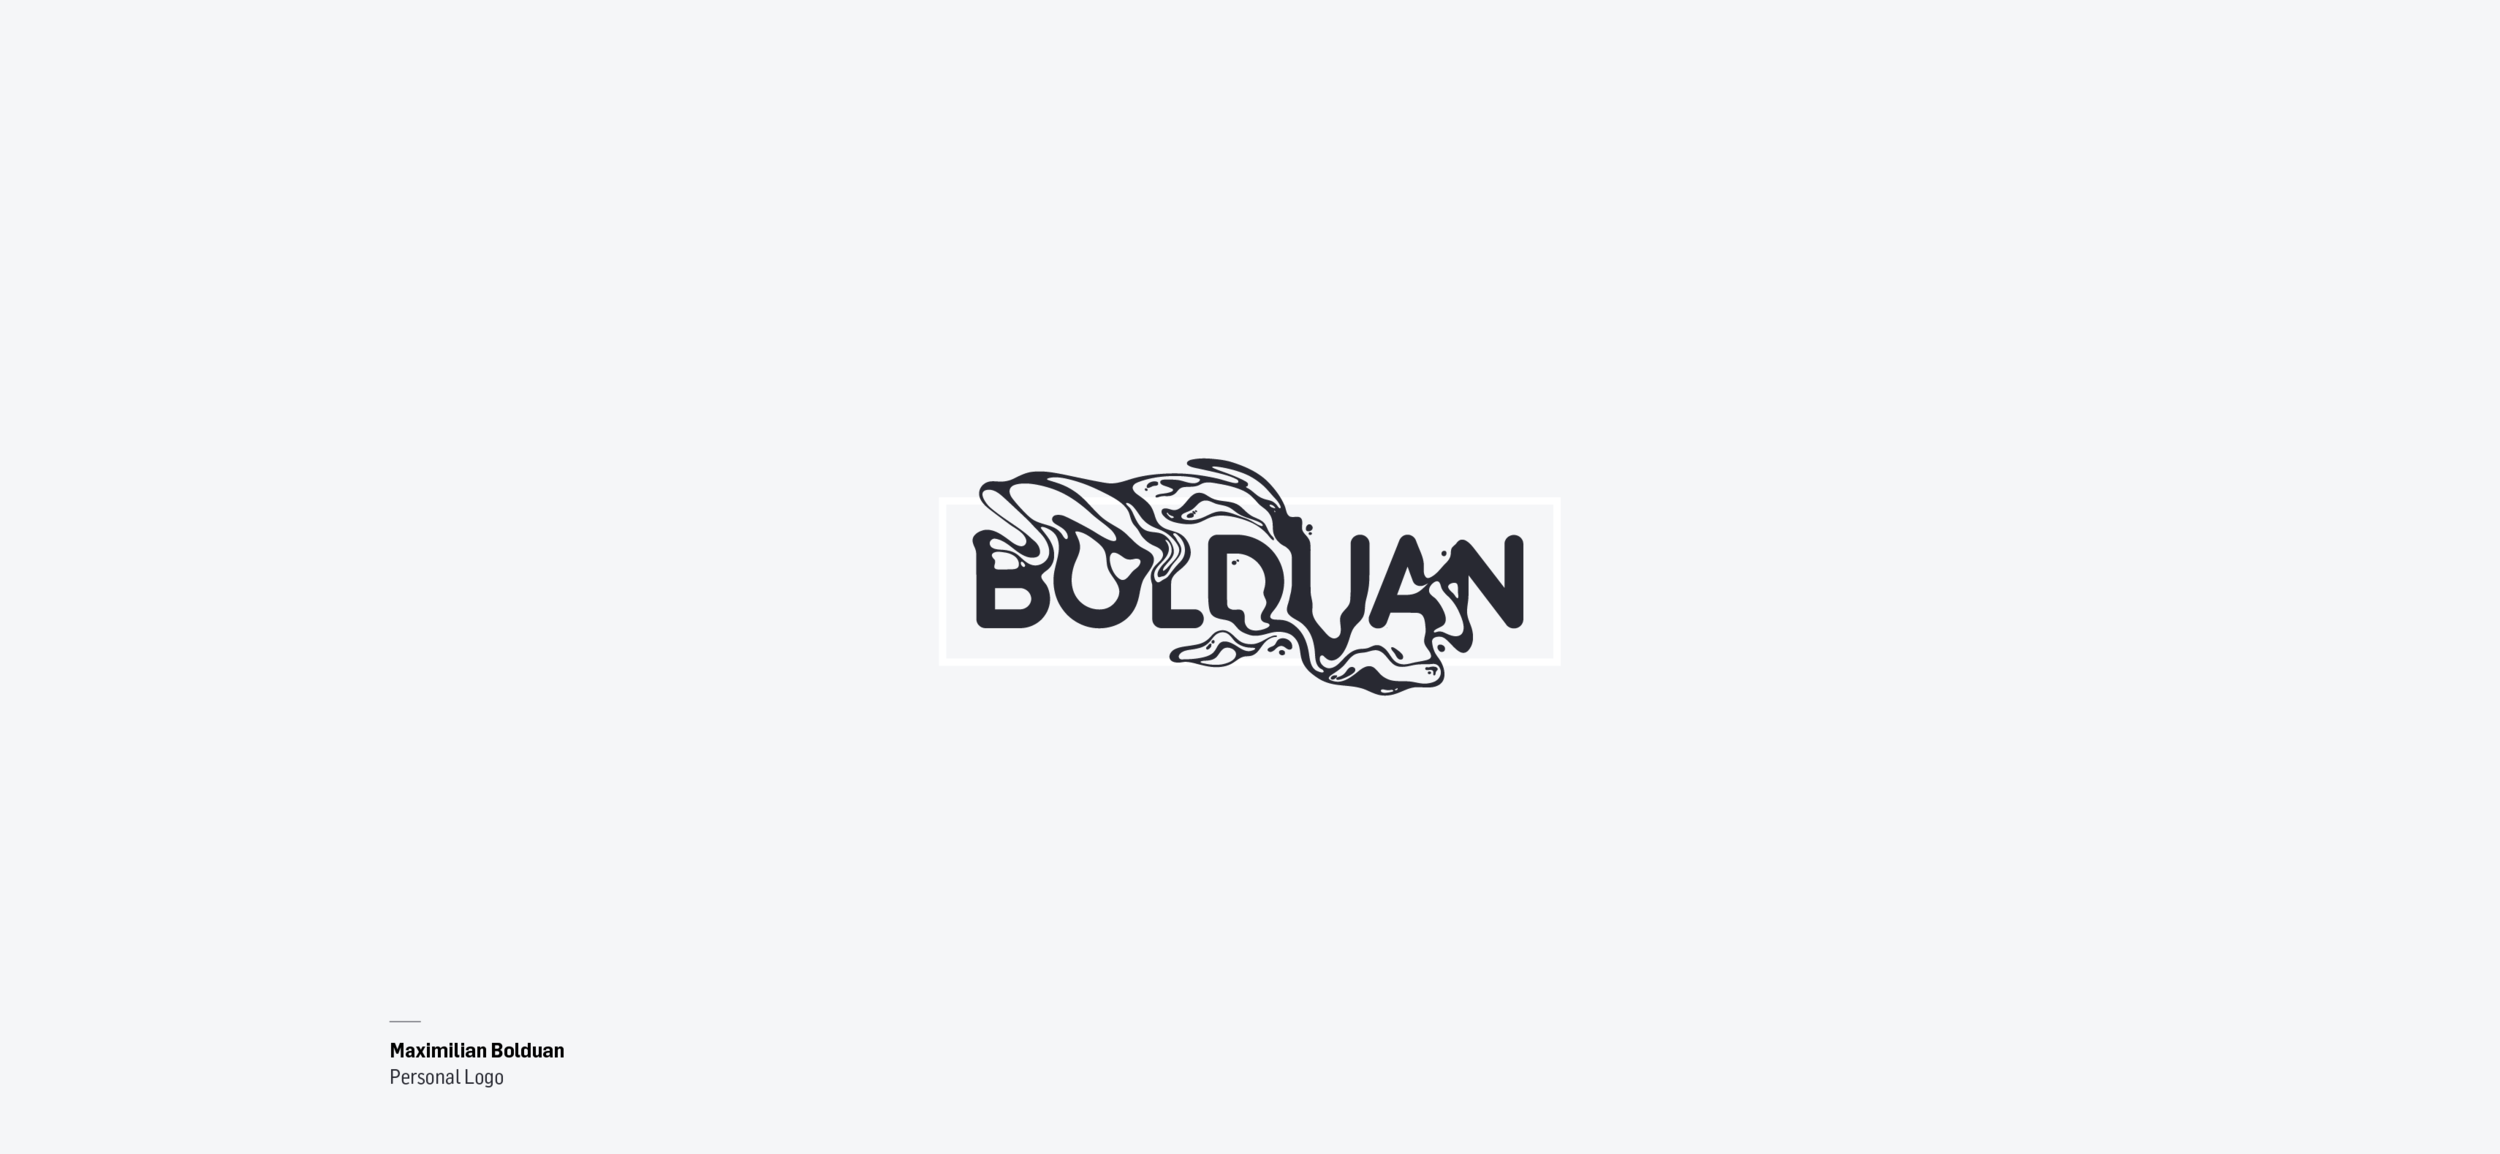 01_Bolduan-01.png